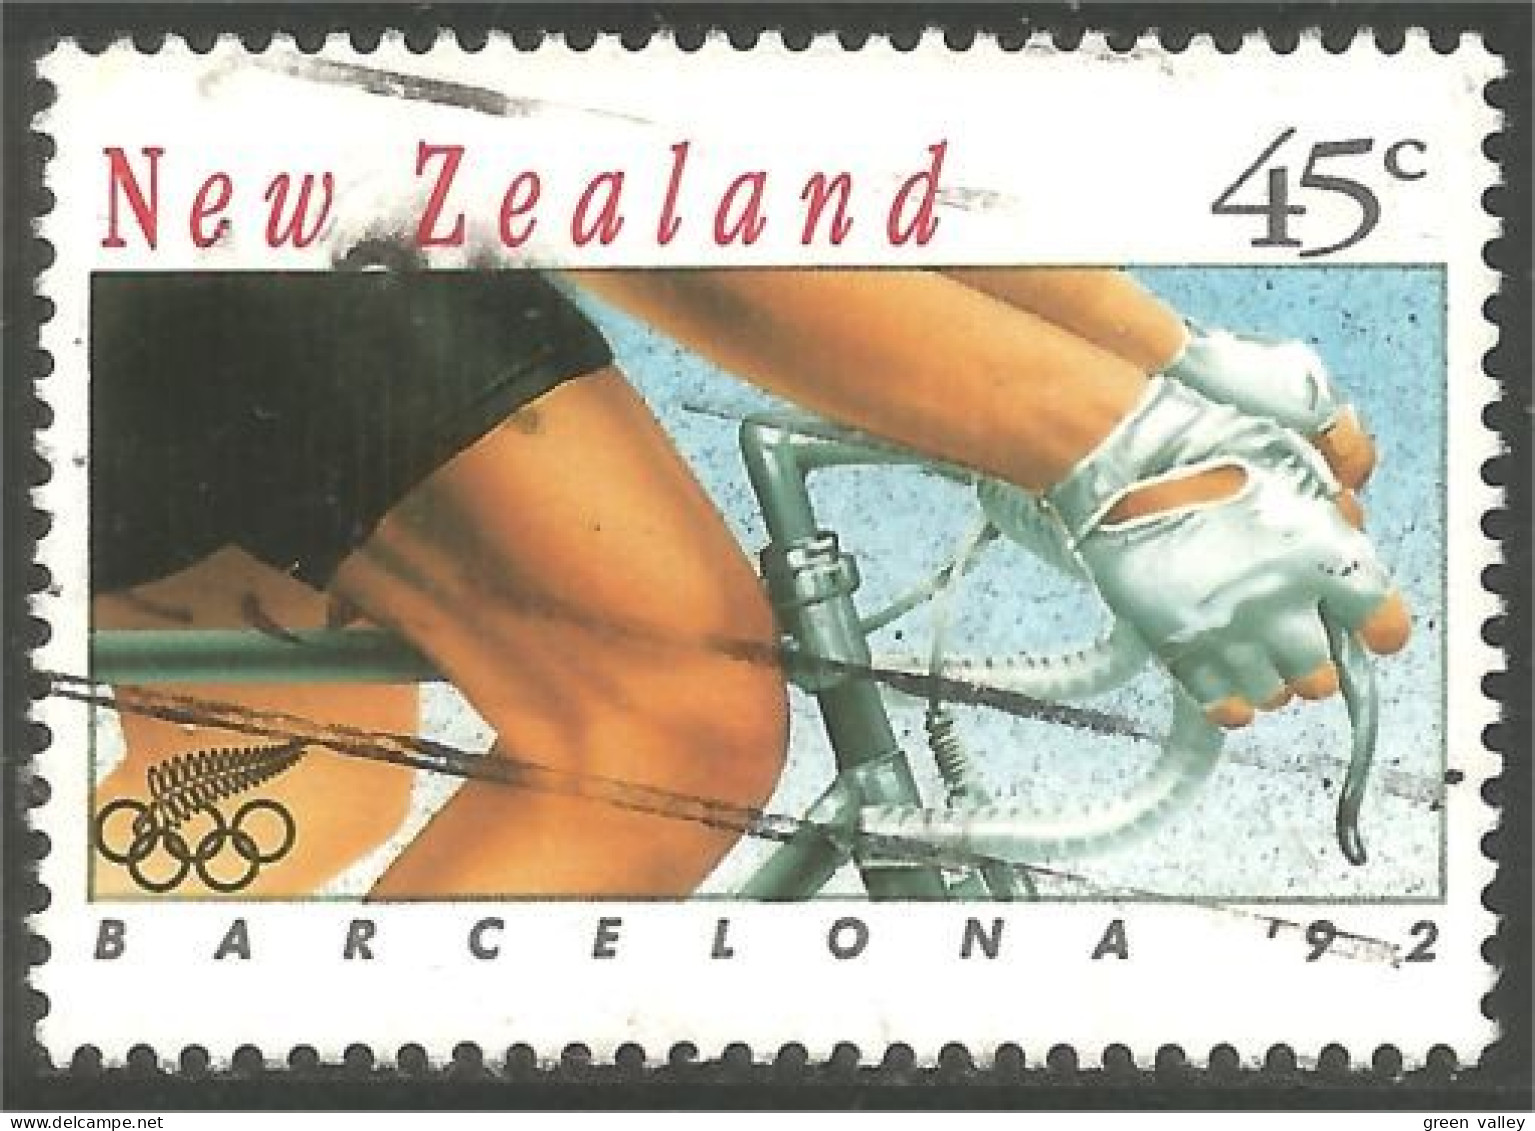 706 New Zealand Olympics Barcelona Cycling Bicycle Race Fahrrad Bicyclette Vélo Cyclisme (NZ-155c) - Wielrennen